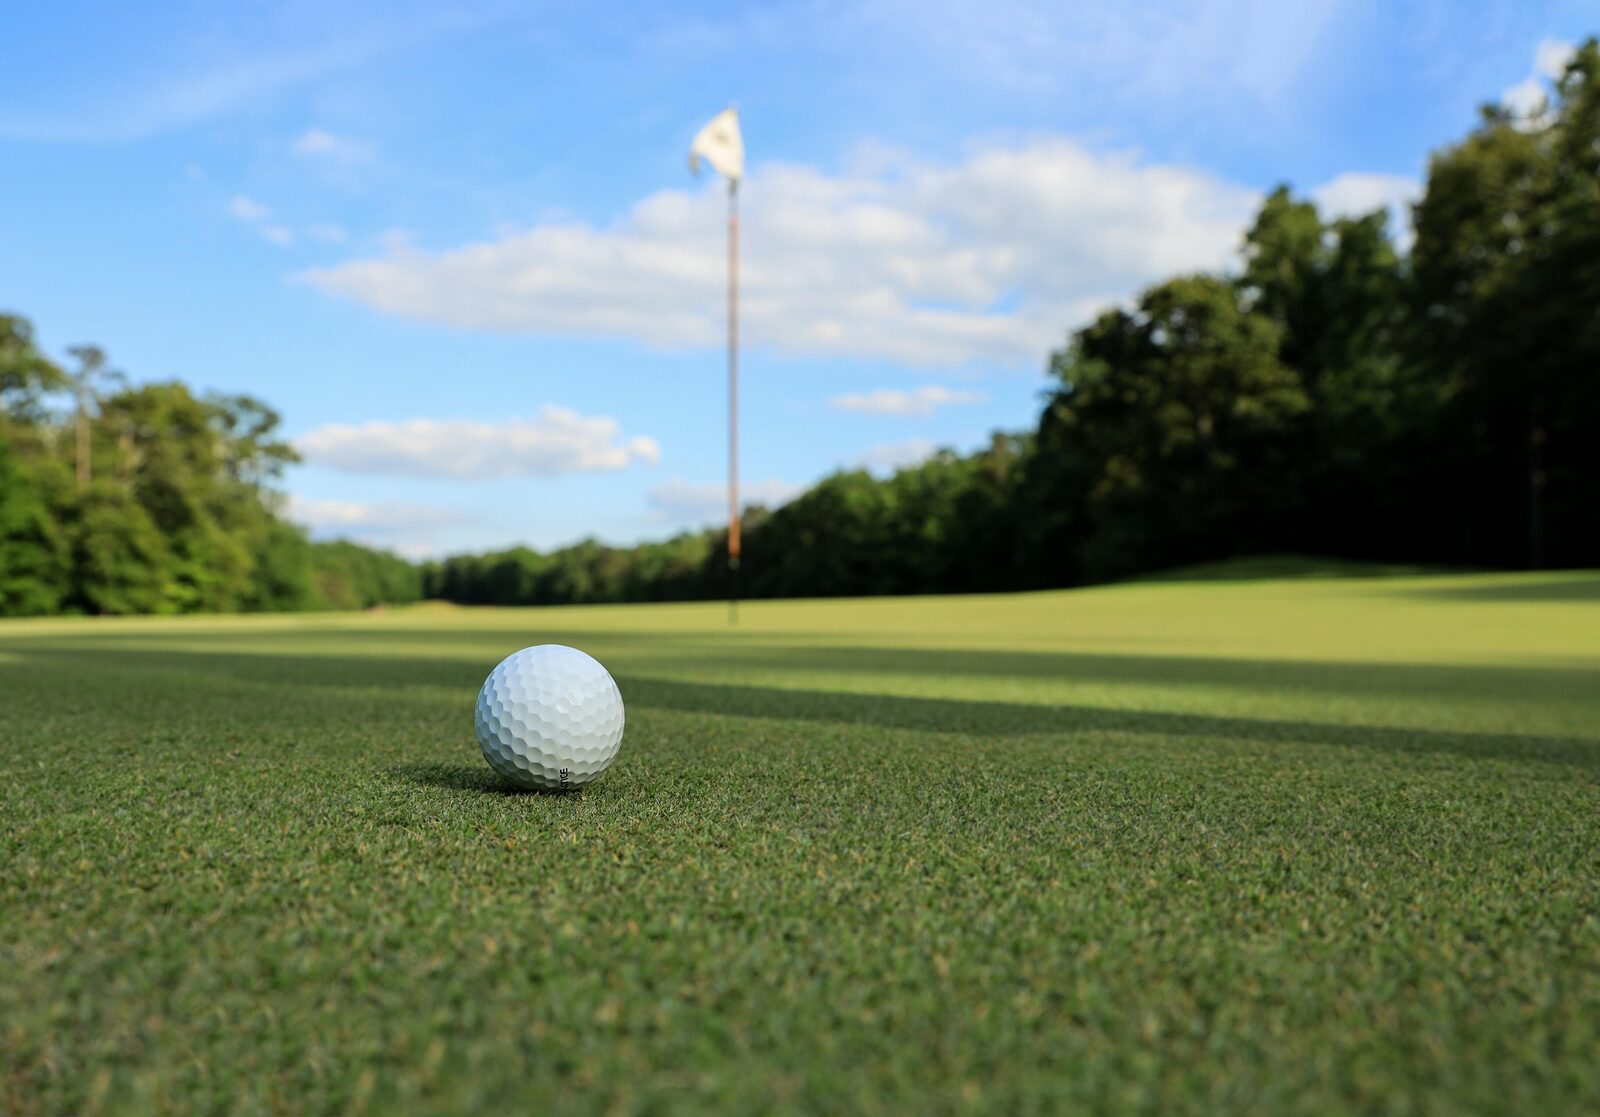 Golfplatz | 9 Löcher im Grünen